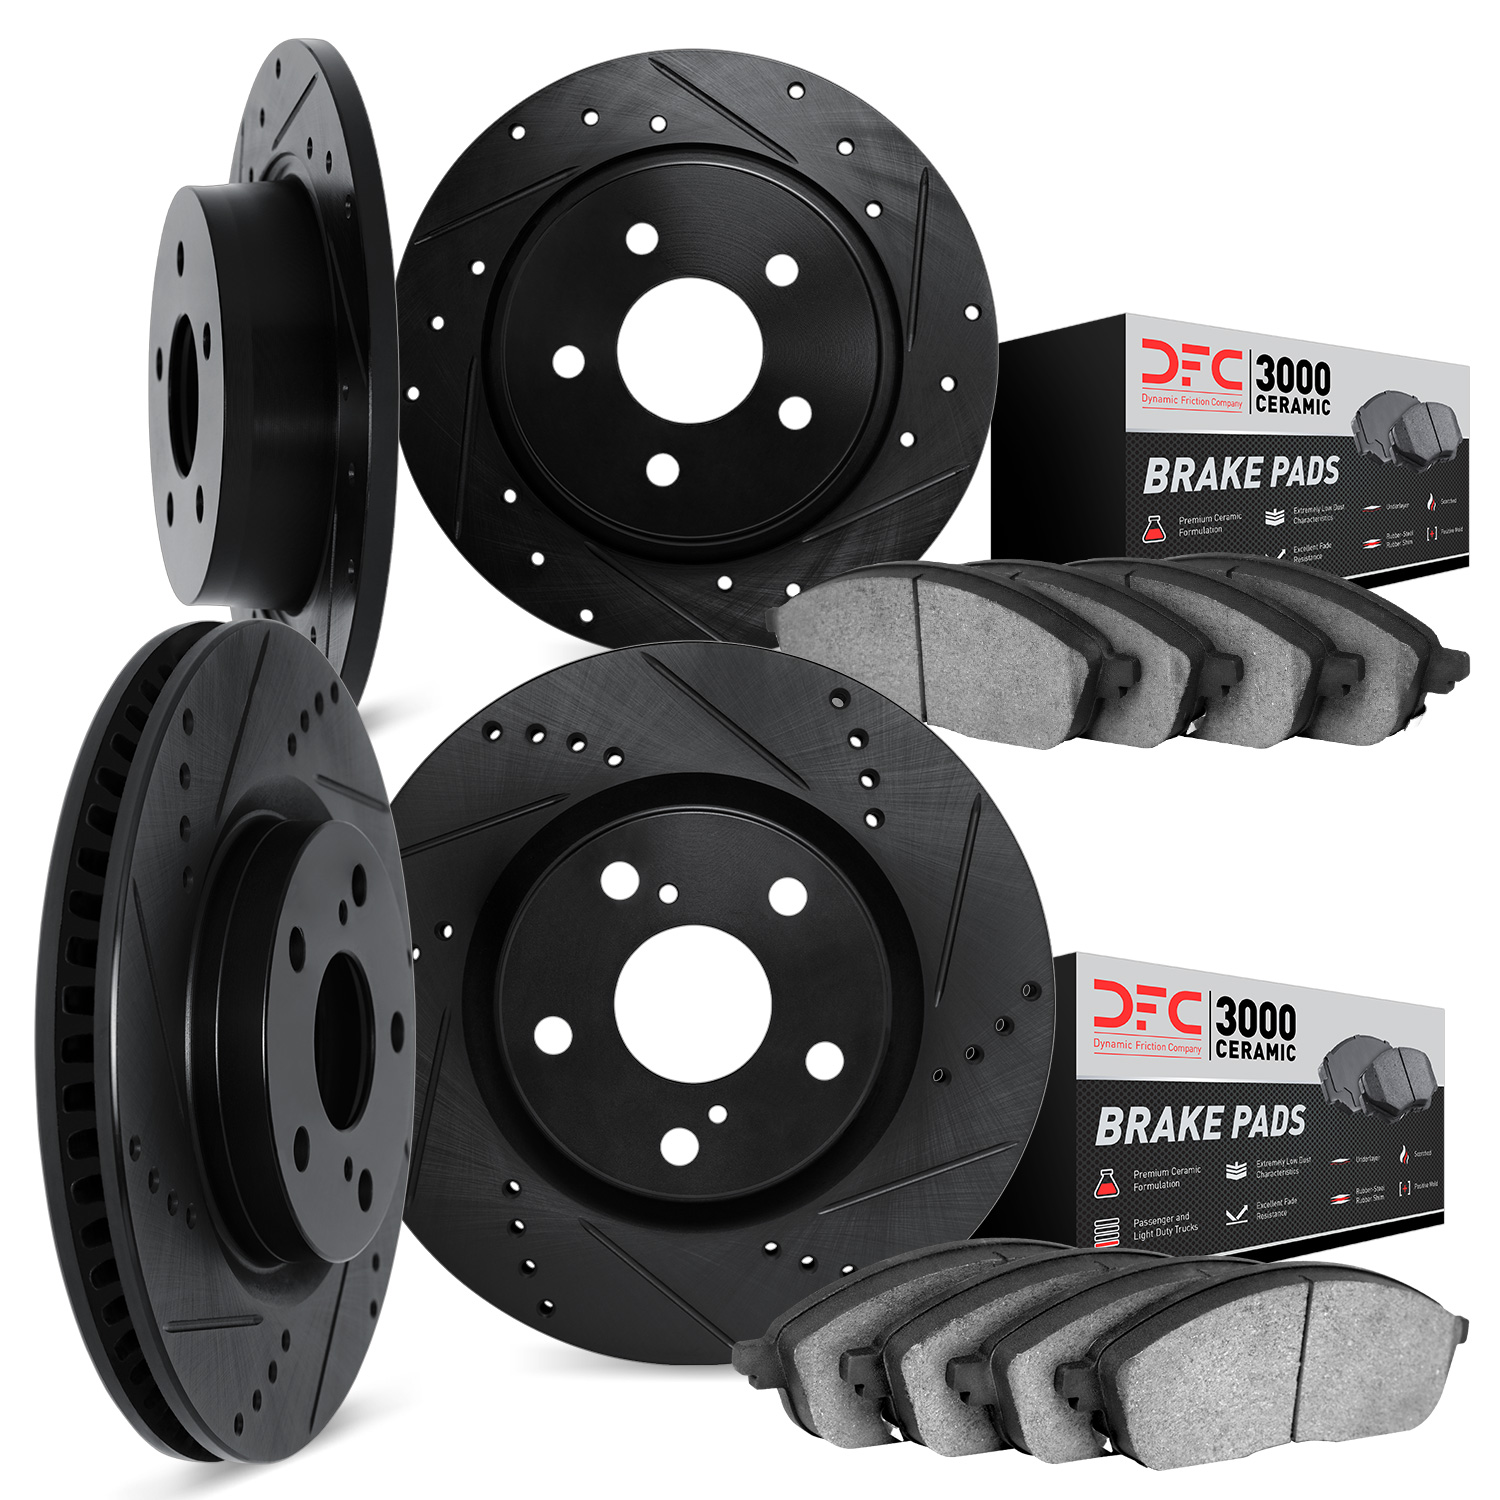 8304-54071 Drilled/Slotted Brake Rotors with 3000-Series Ceramic Brake Pads Kit [Black], 2012-2018 Ford/Lincoln/Mercury/Mazda, P